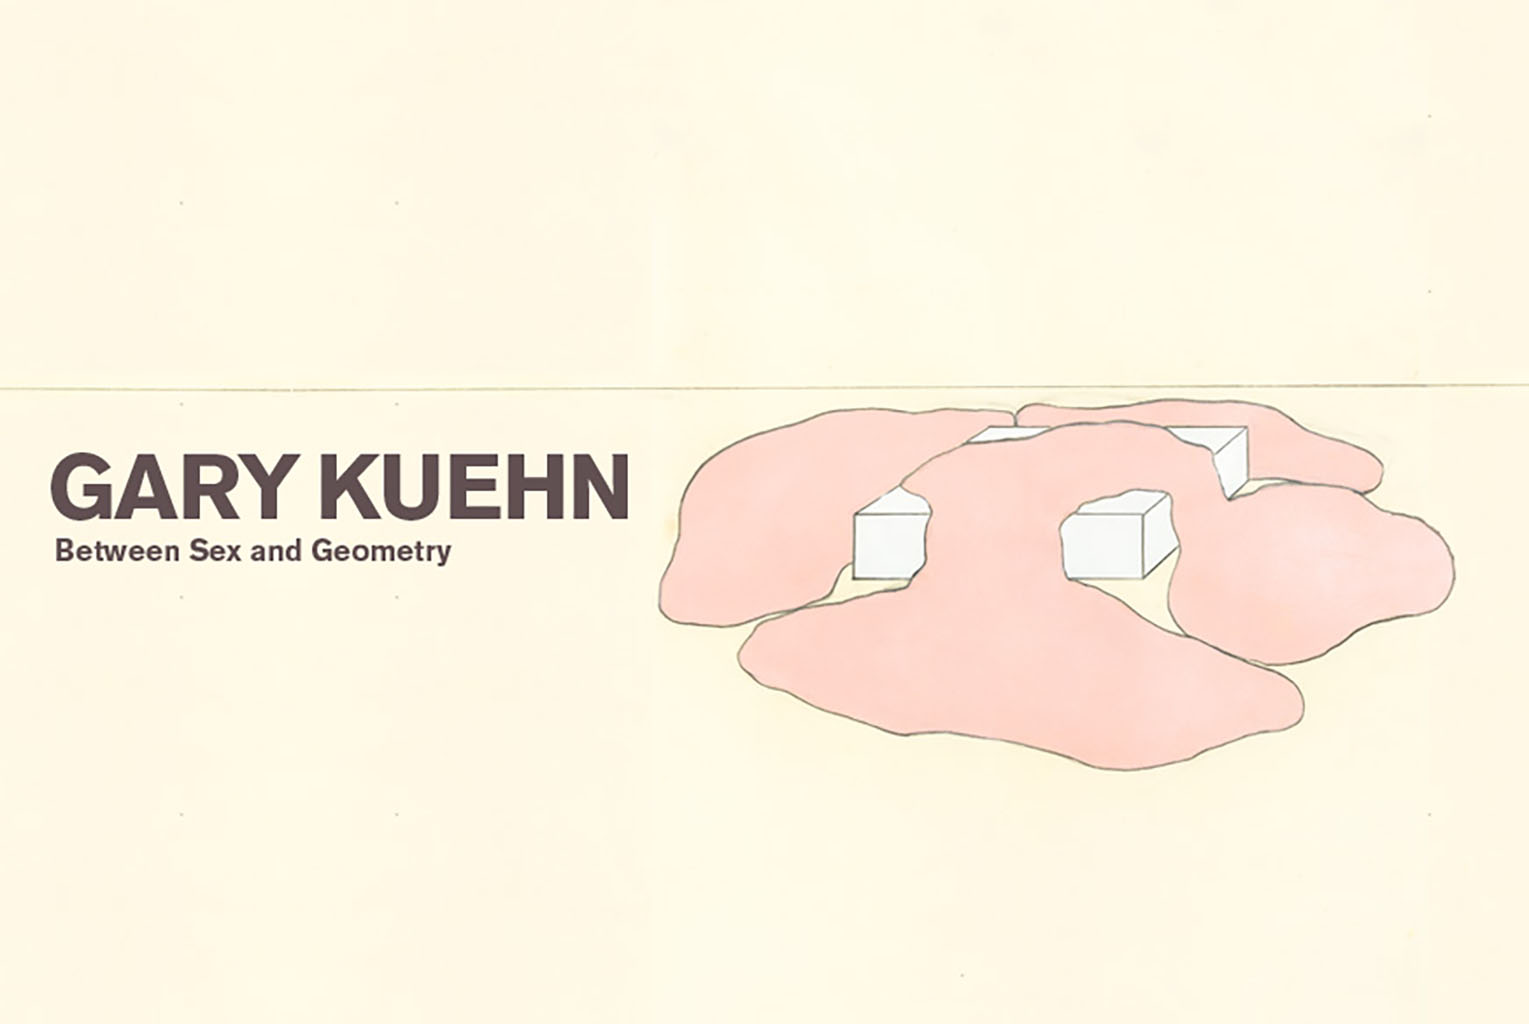 Gary Kuehn